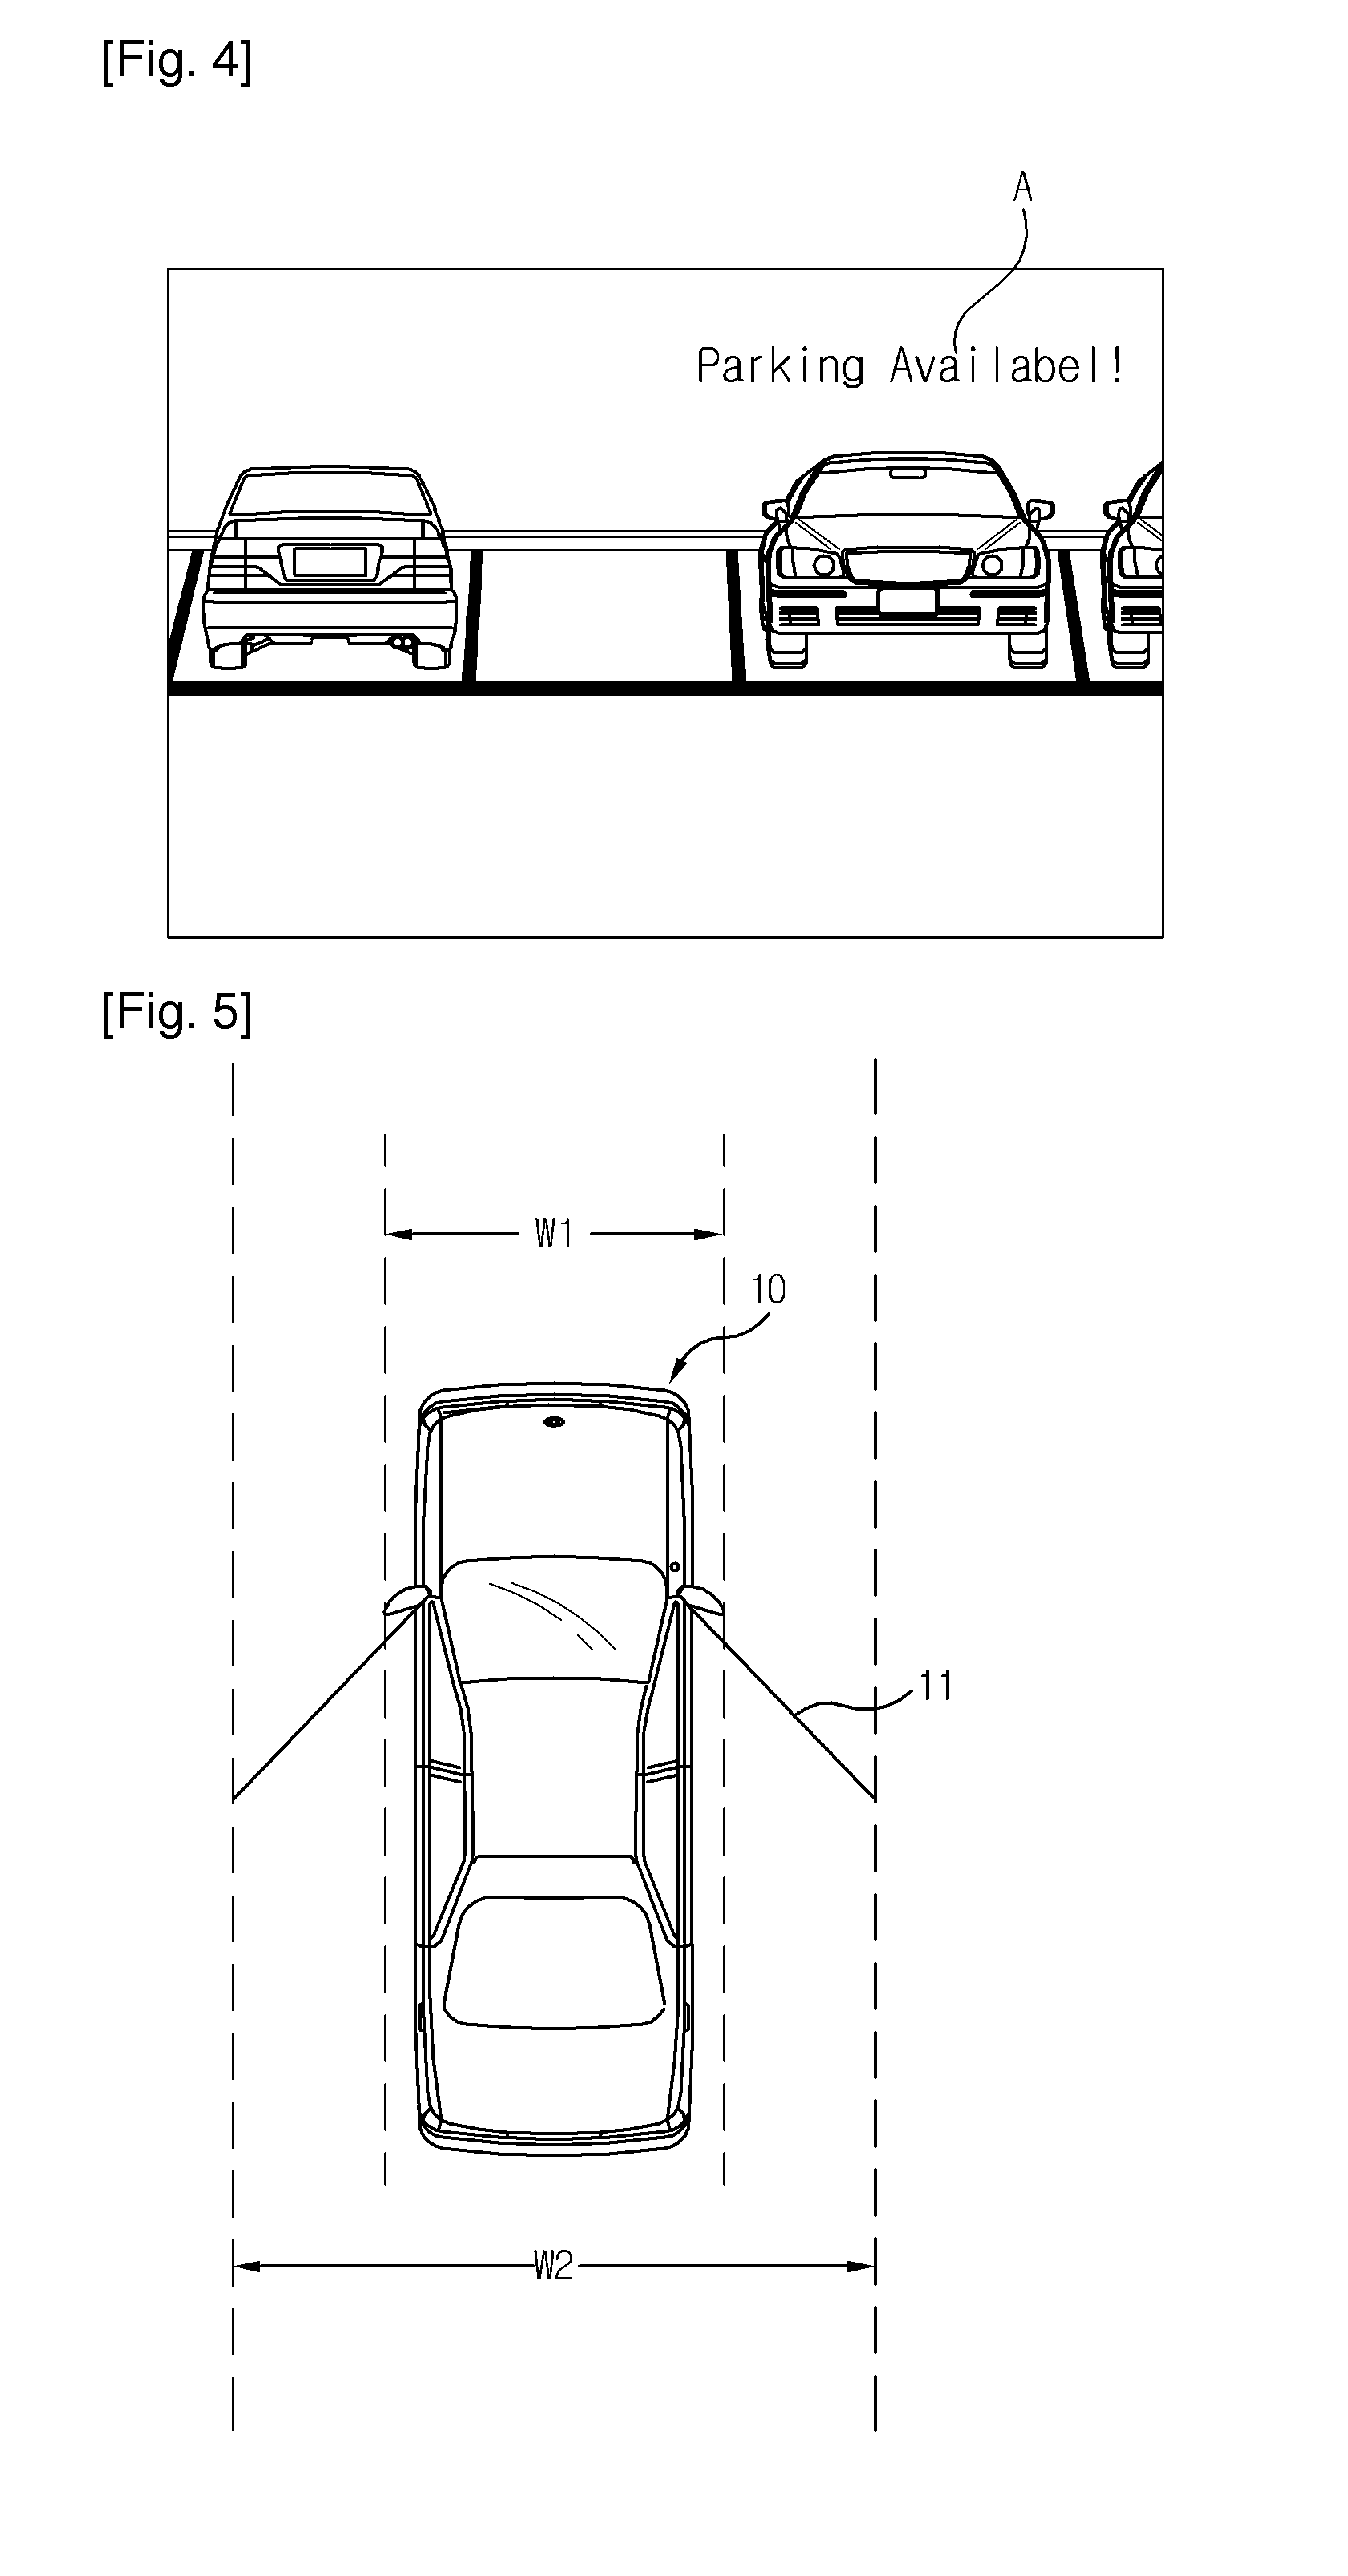 Camera apparatus of vehicle